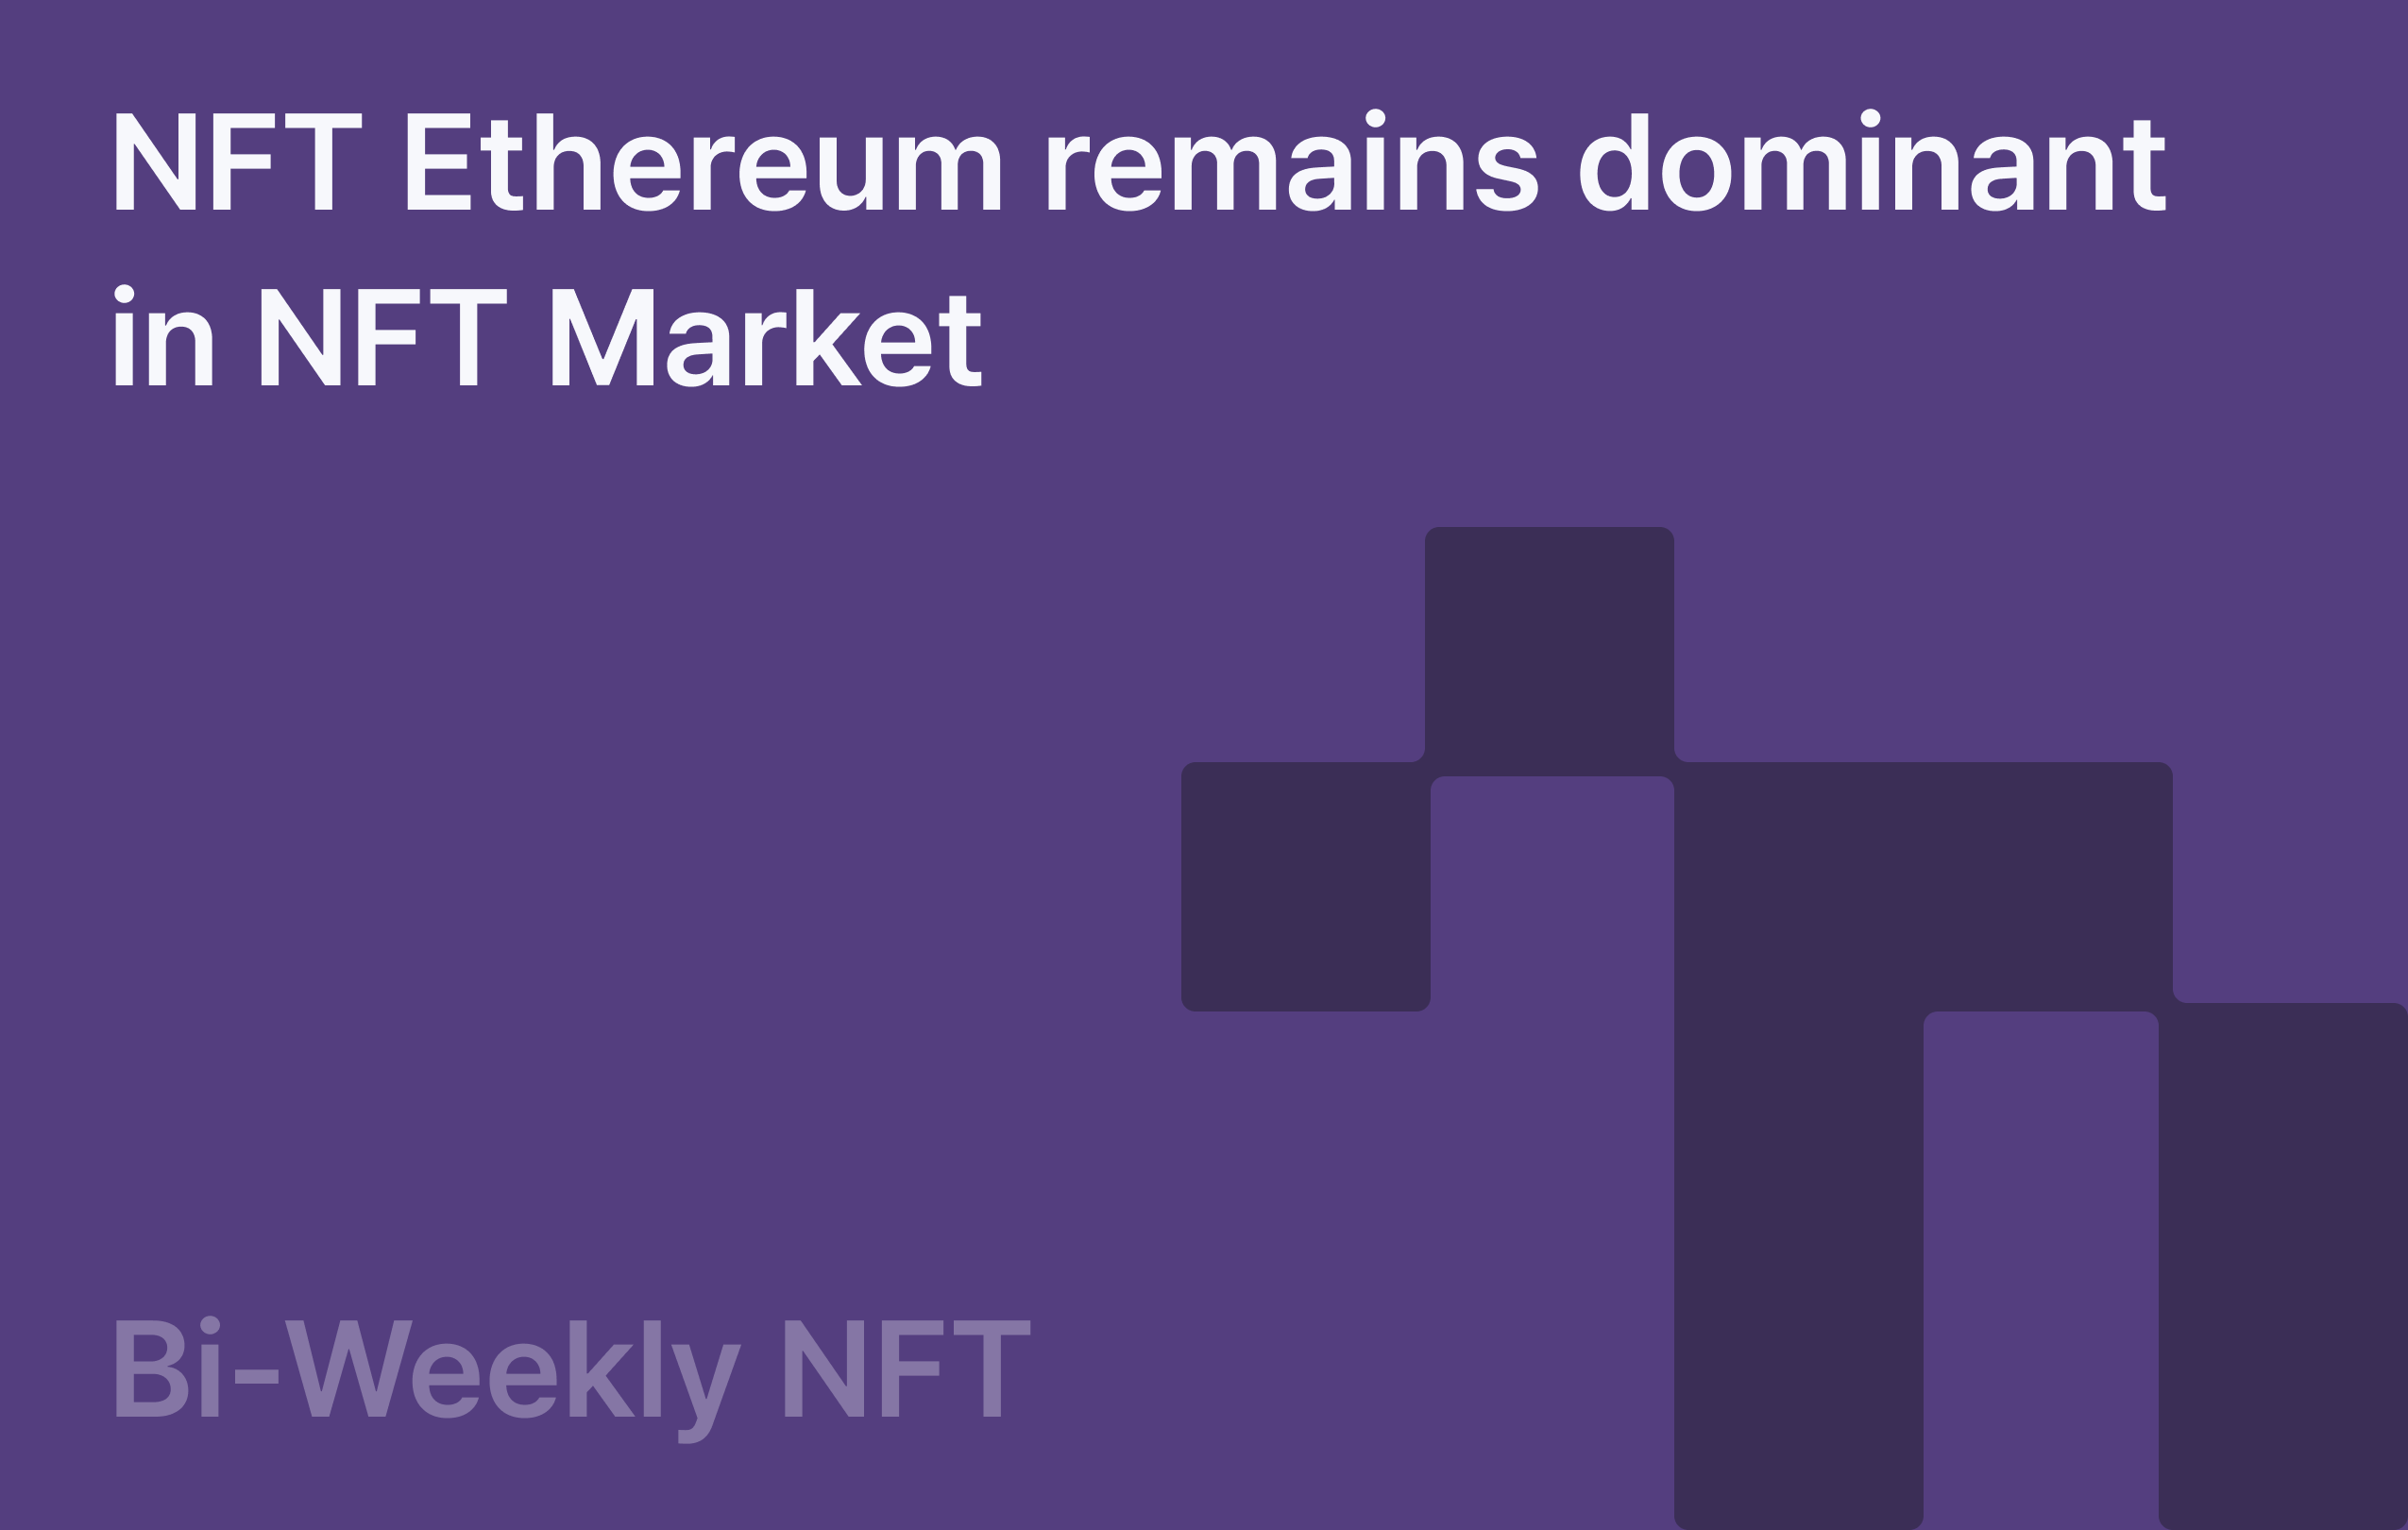 Bi-Weekly NFT: Ethereum remains dominant in NFT Market